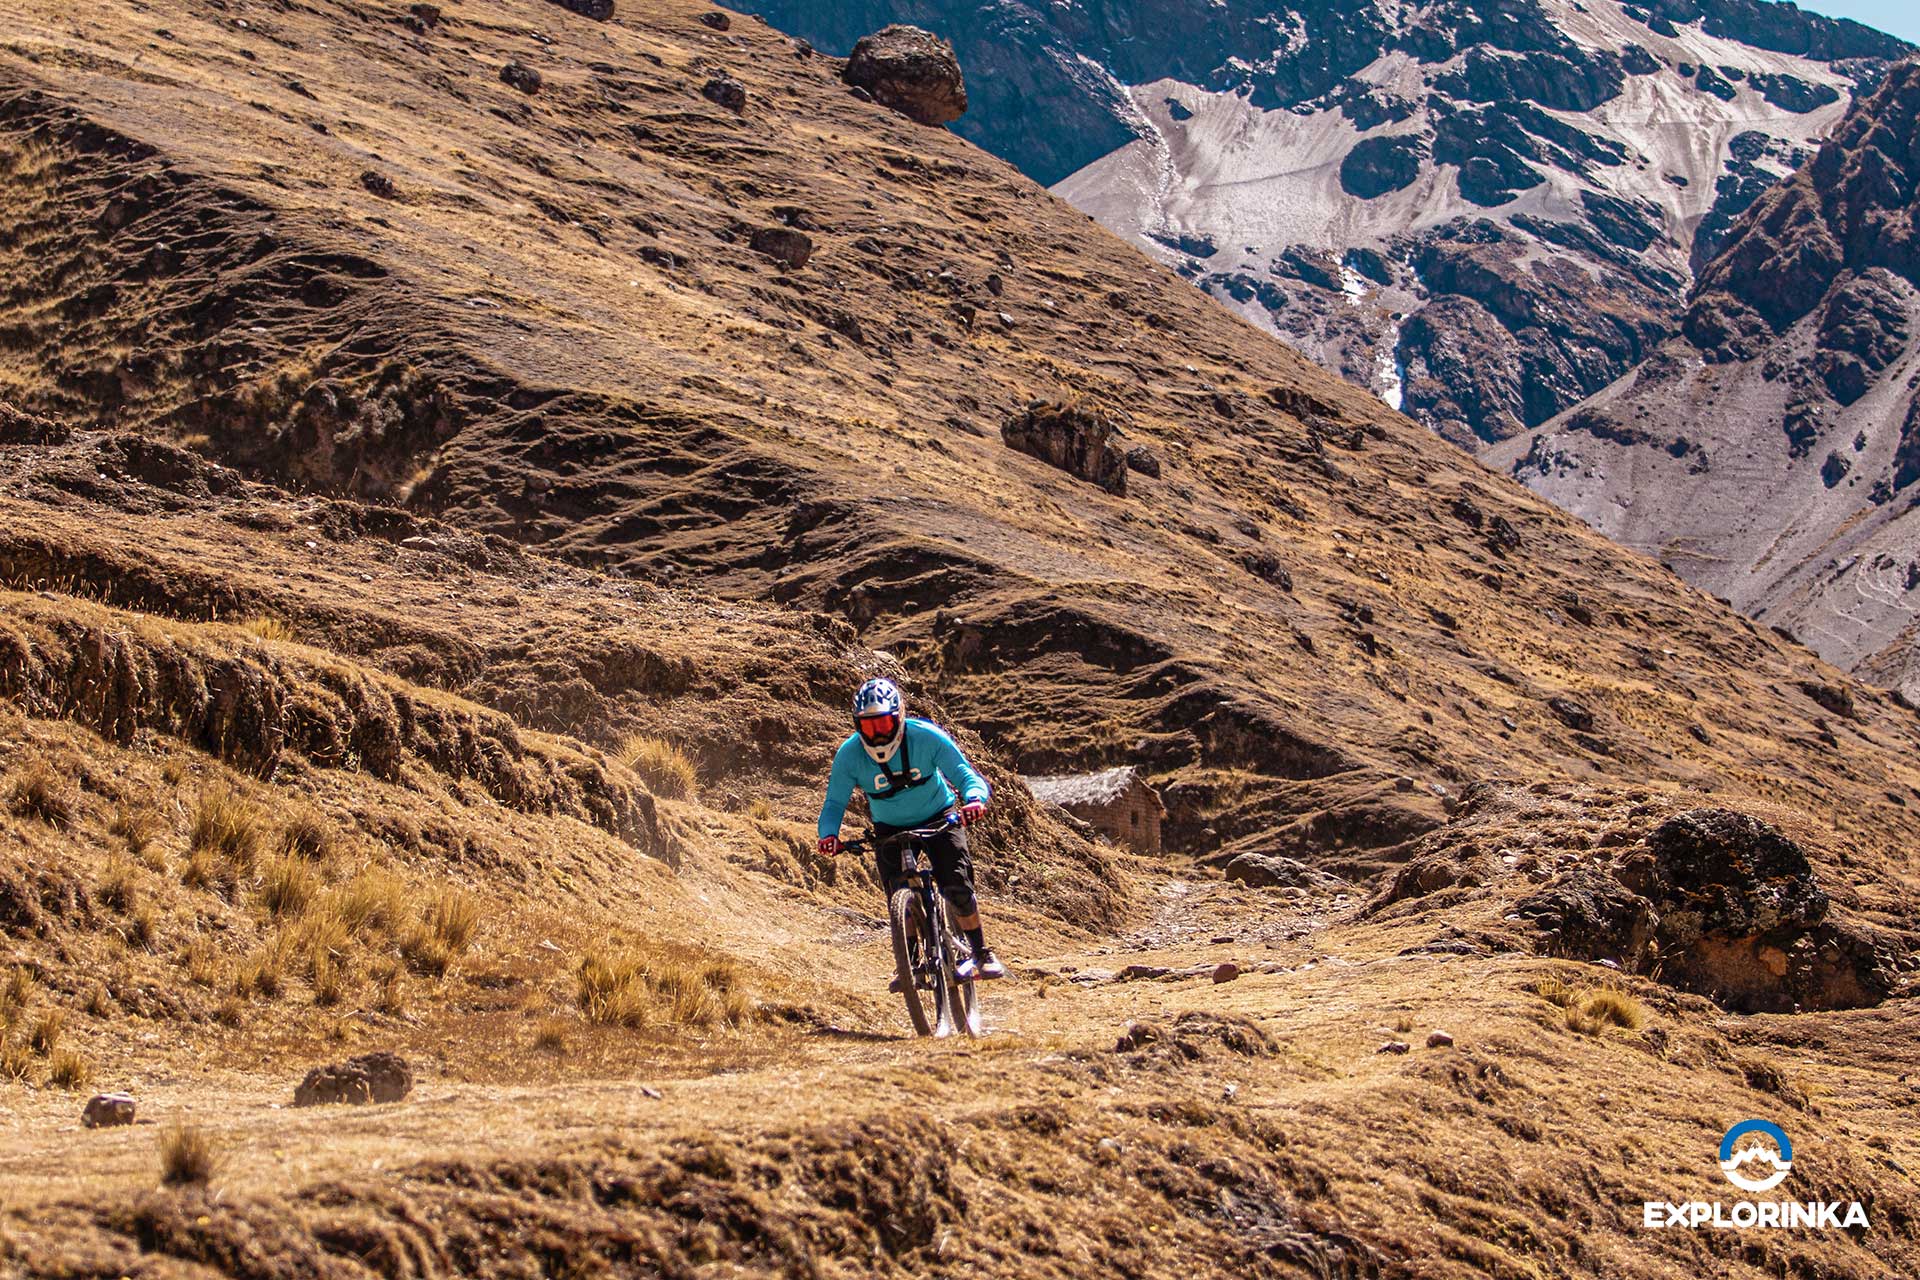 Bajdada de Lares - 6 best bike routes in Cusco, Peru